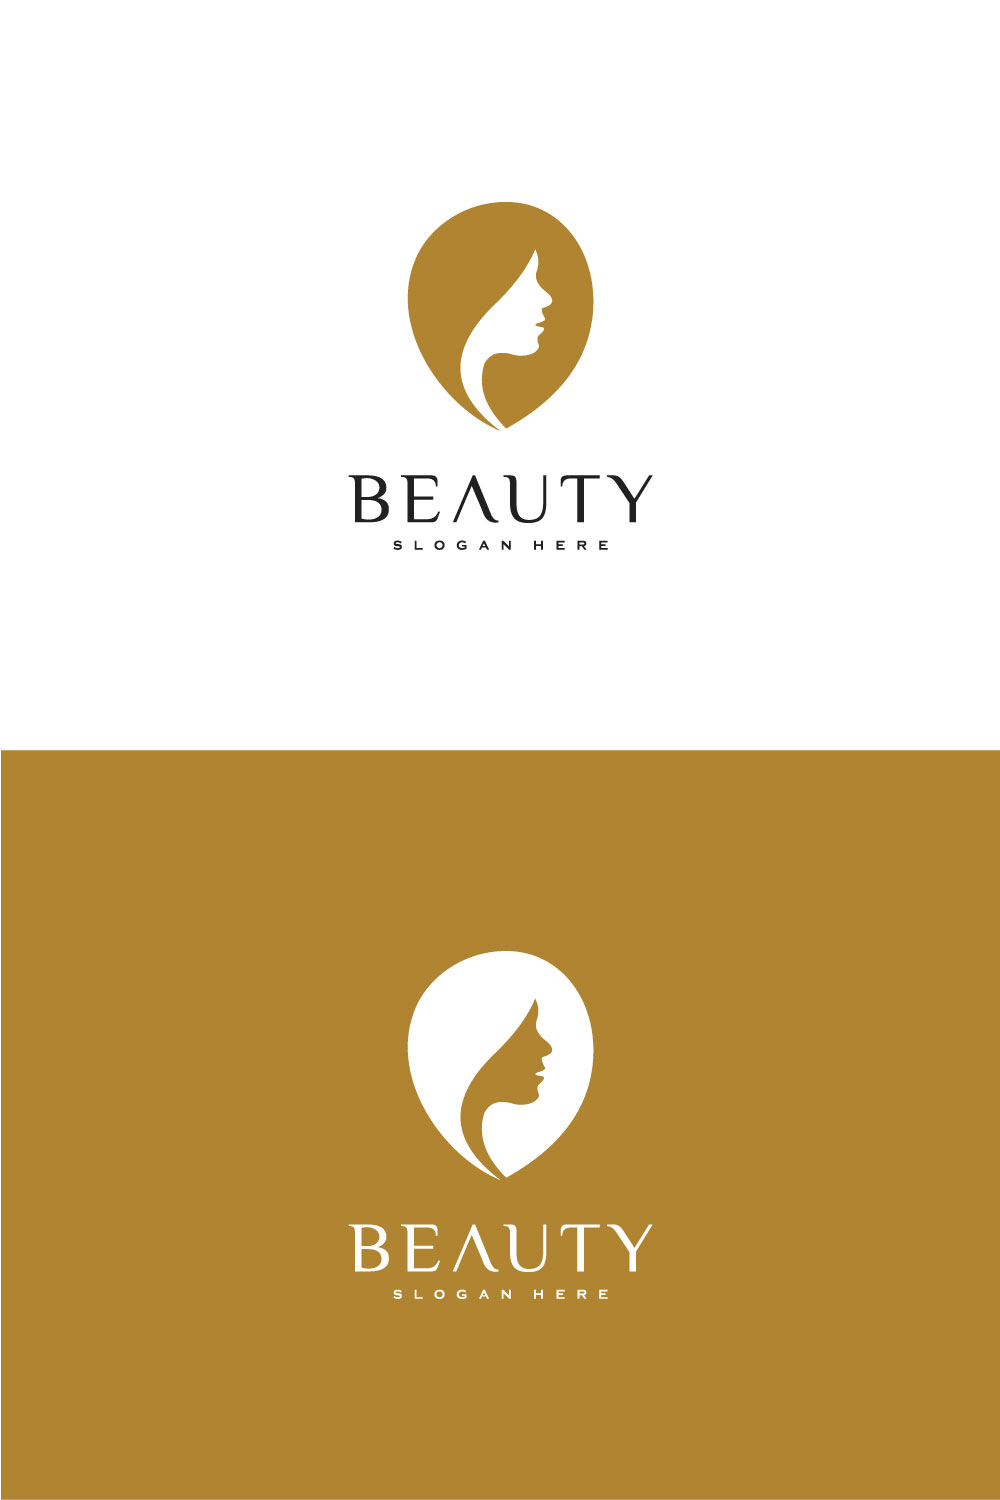 Beauty Woman Hairstyle Logo Design pinterest.